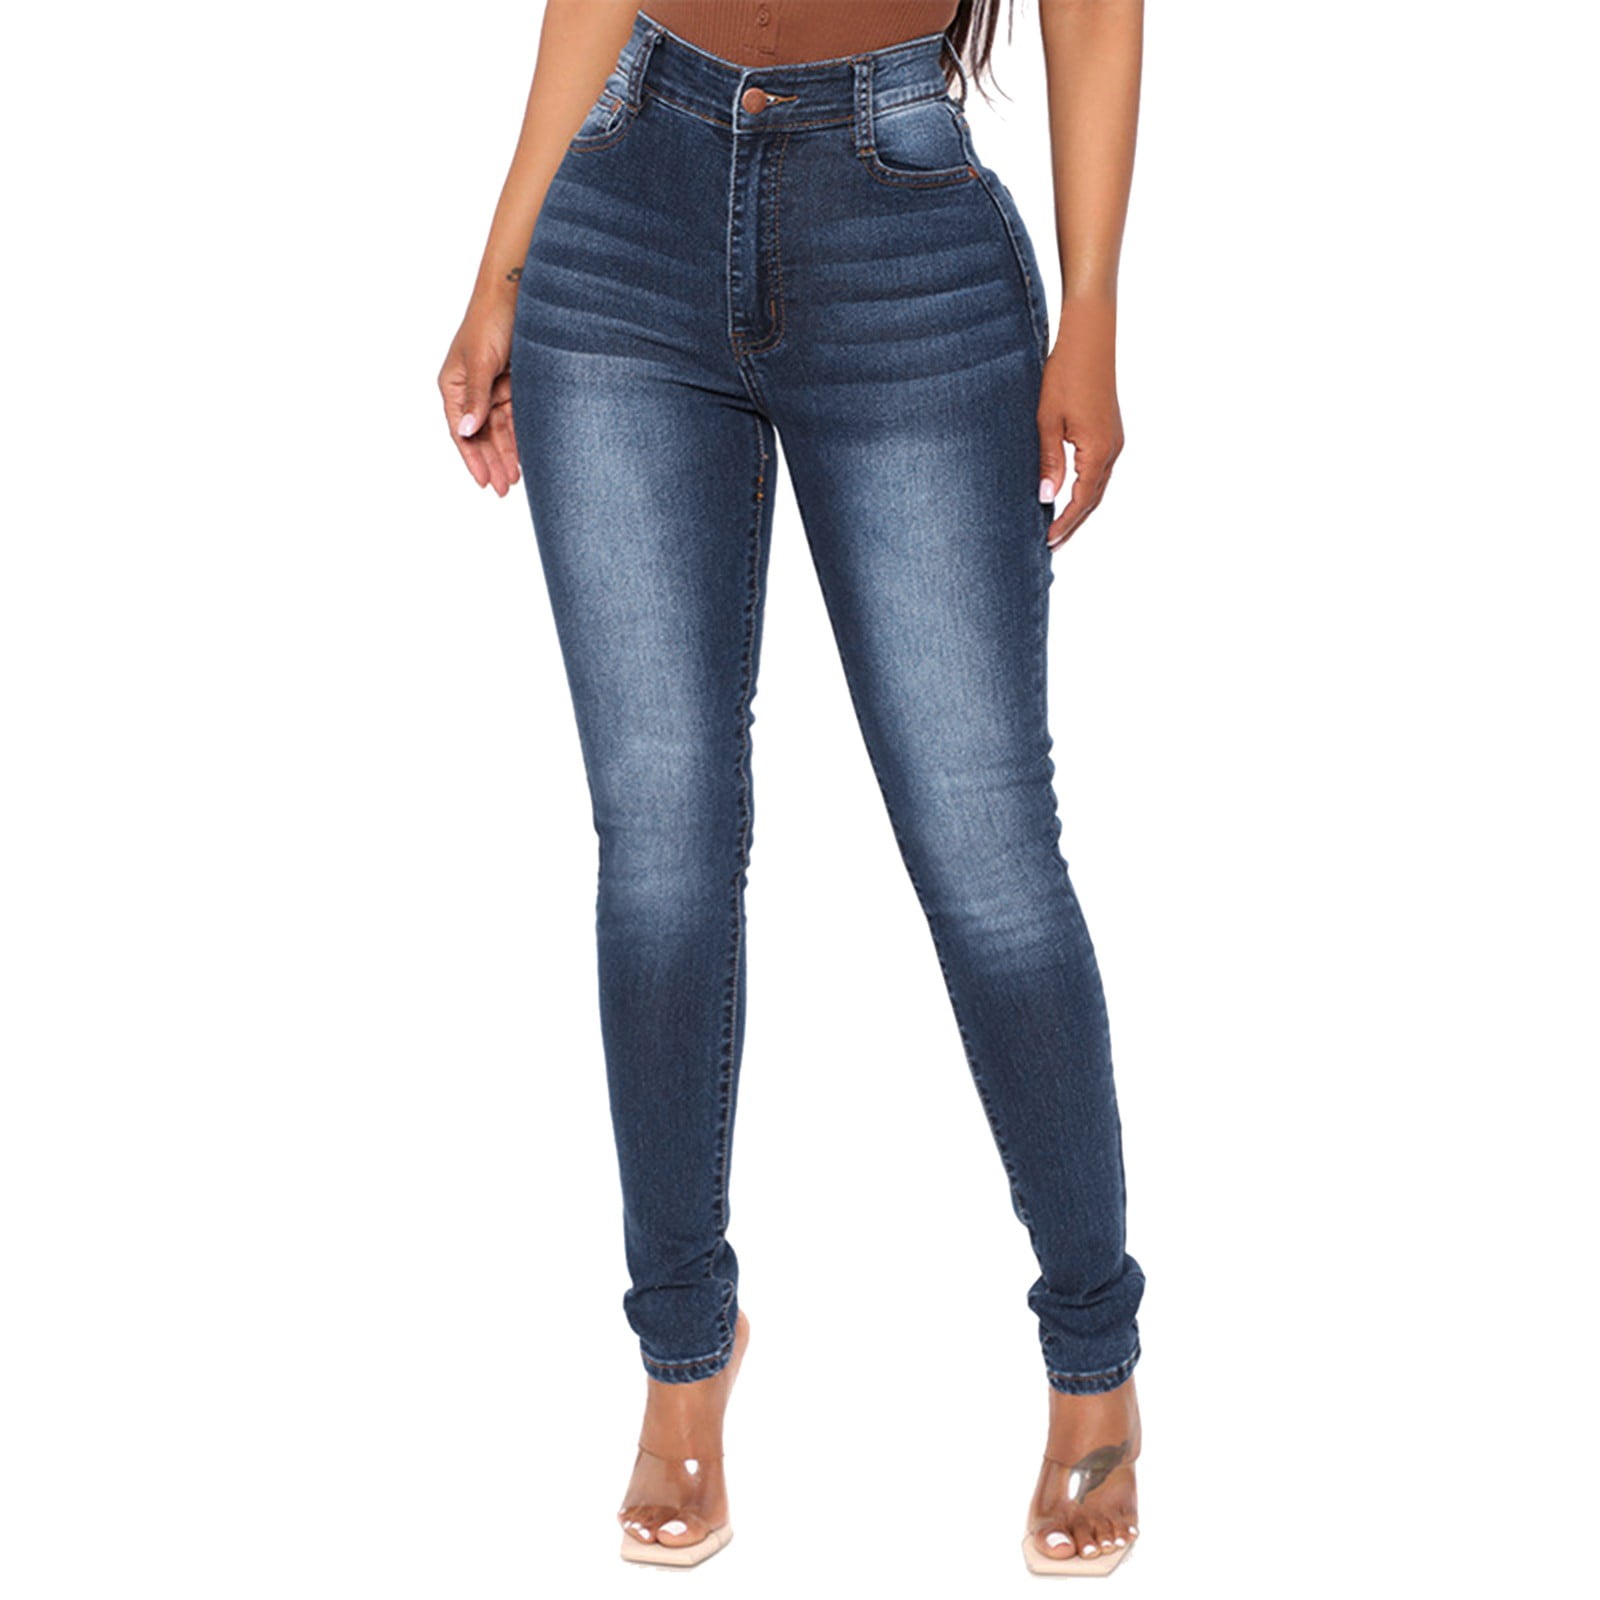 Entyinea Jeans For Women, Womens Stretch Elastic Dominican Republic